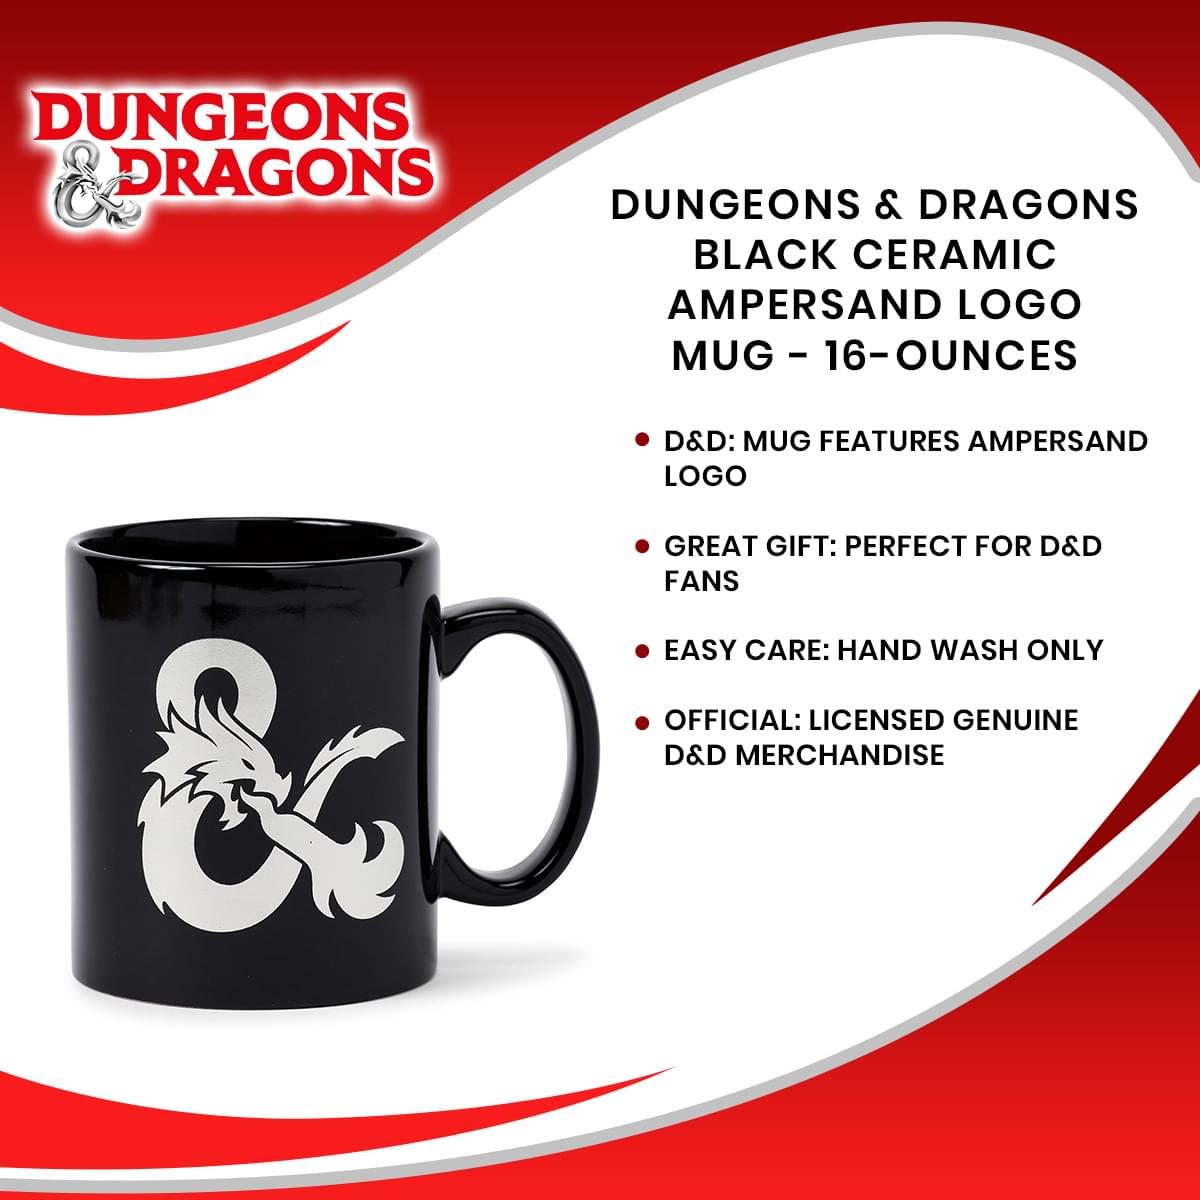 Dungeons & Dragons Black Ceramic Ampersand Logo Mug - 16-Ounces